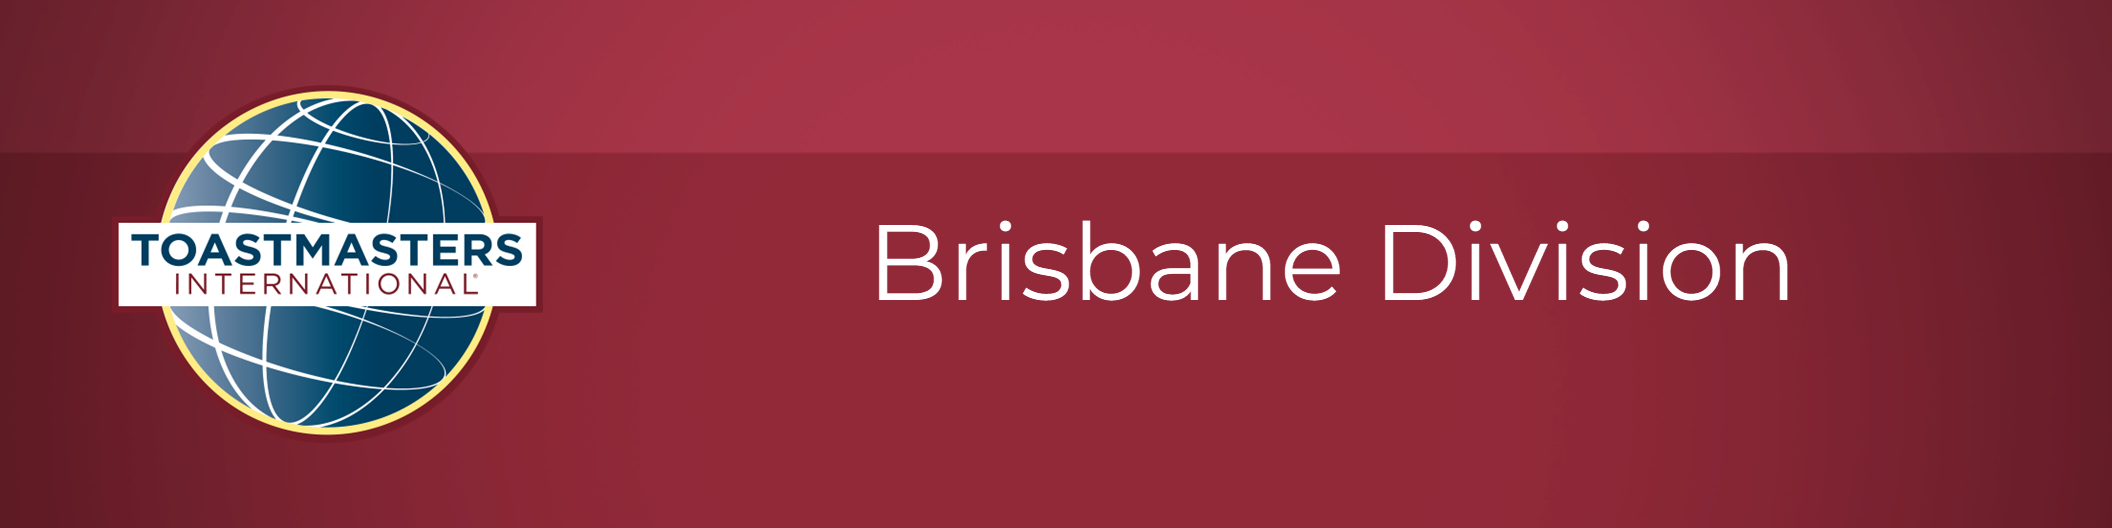 District 69 website page banner for Brisbane Division